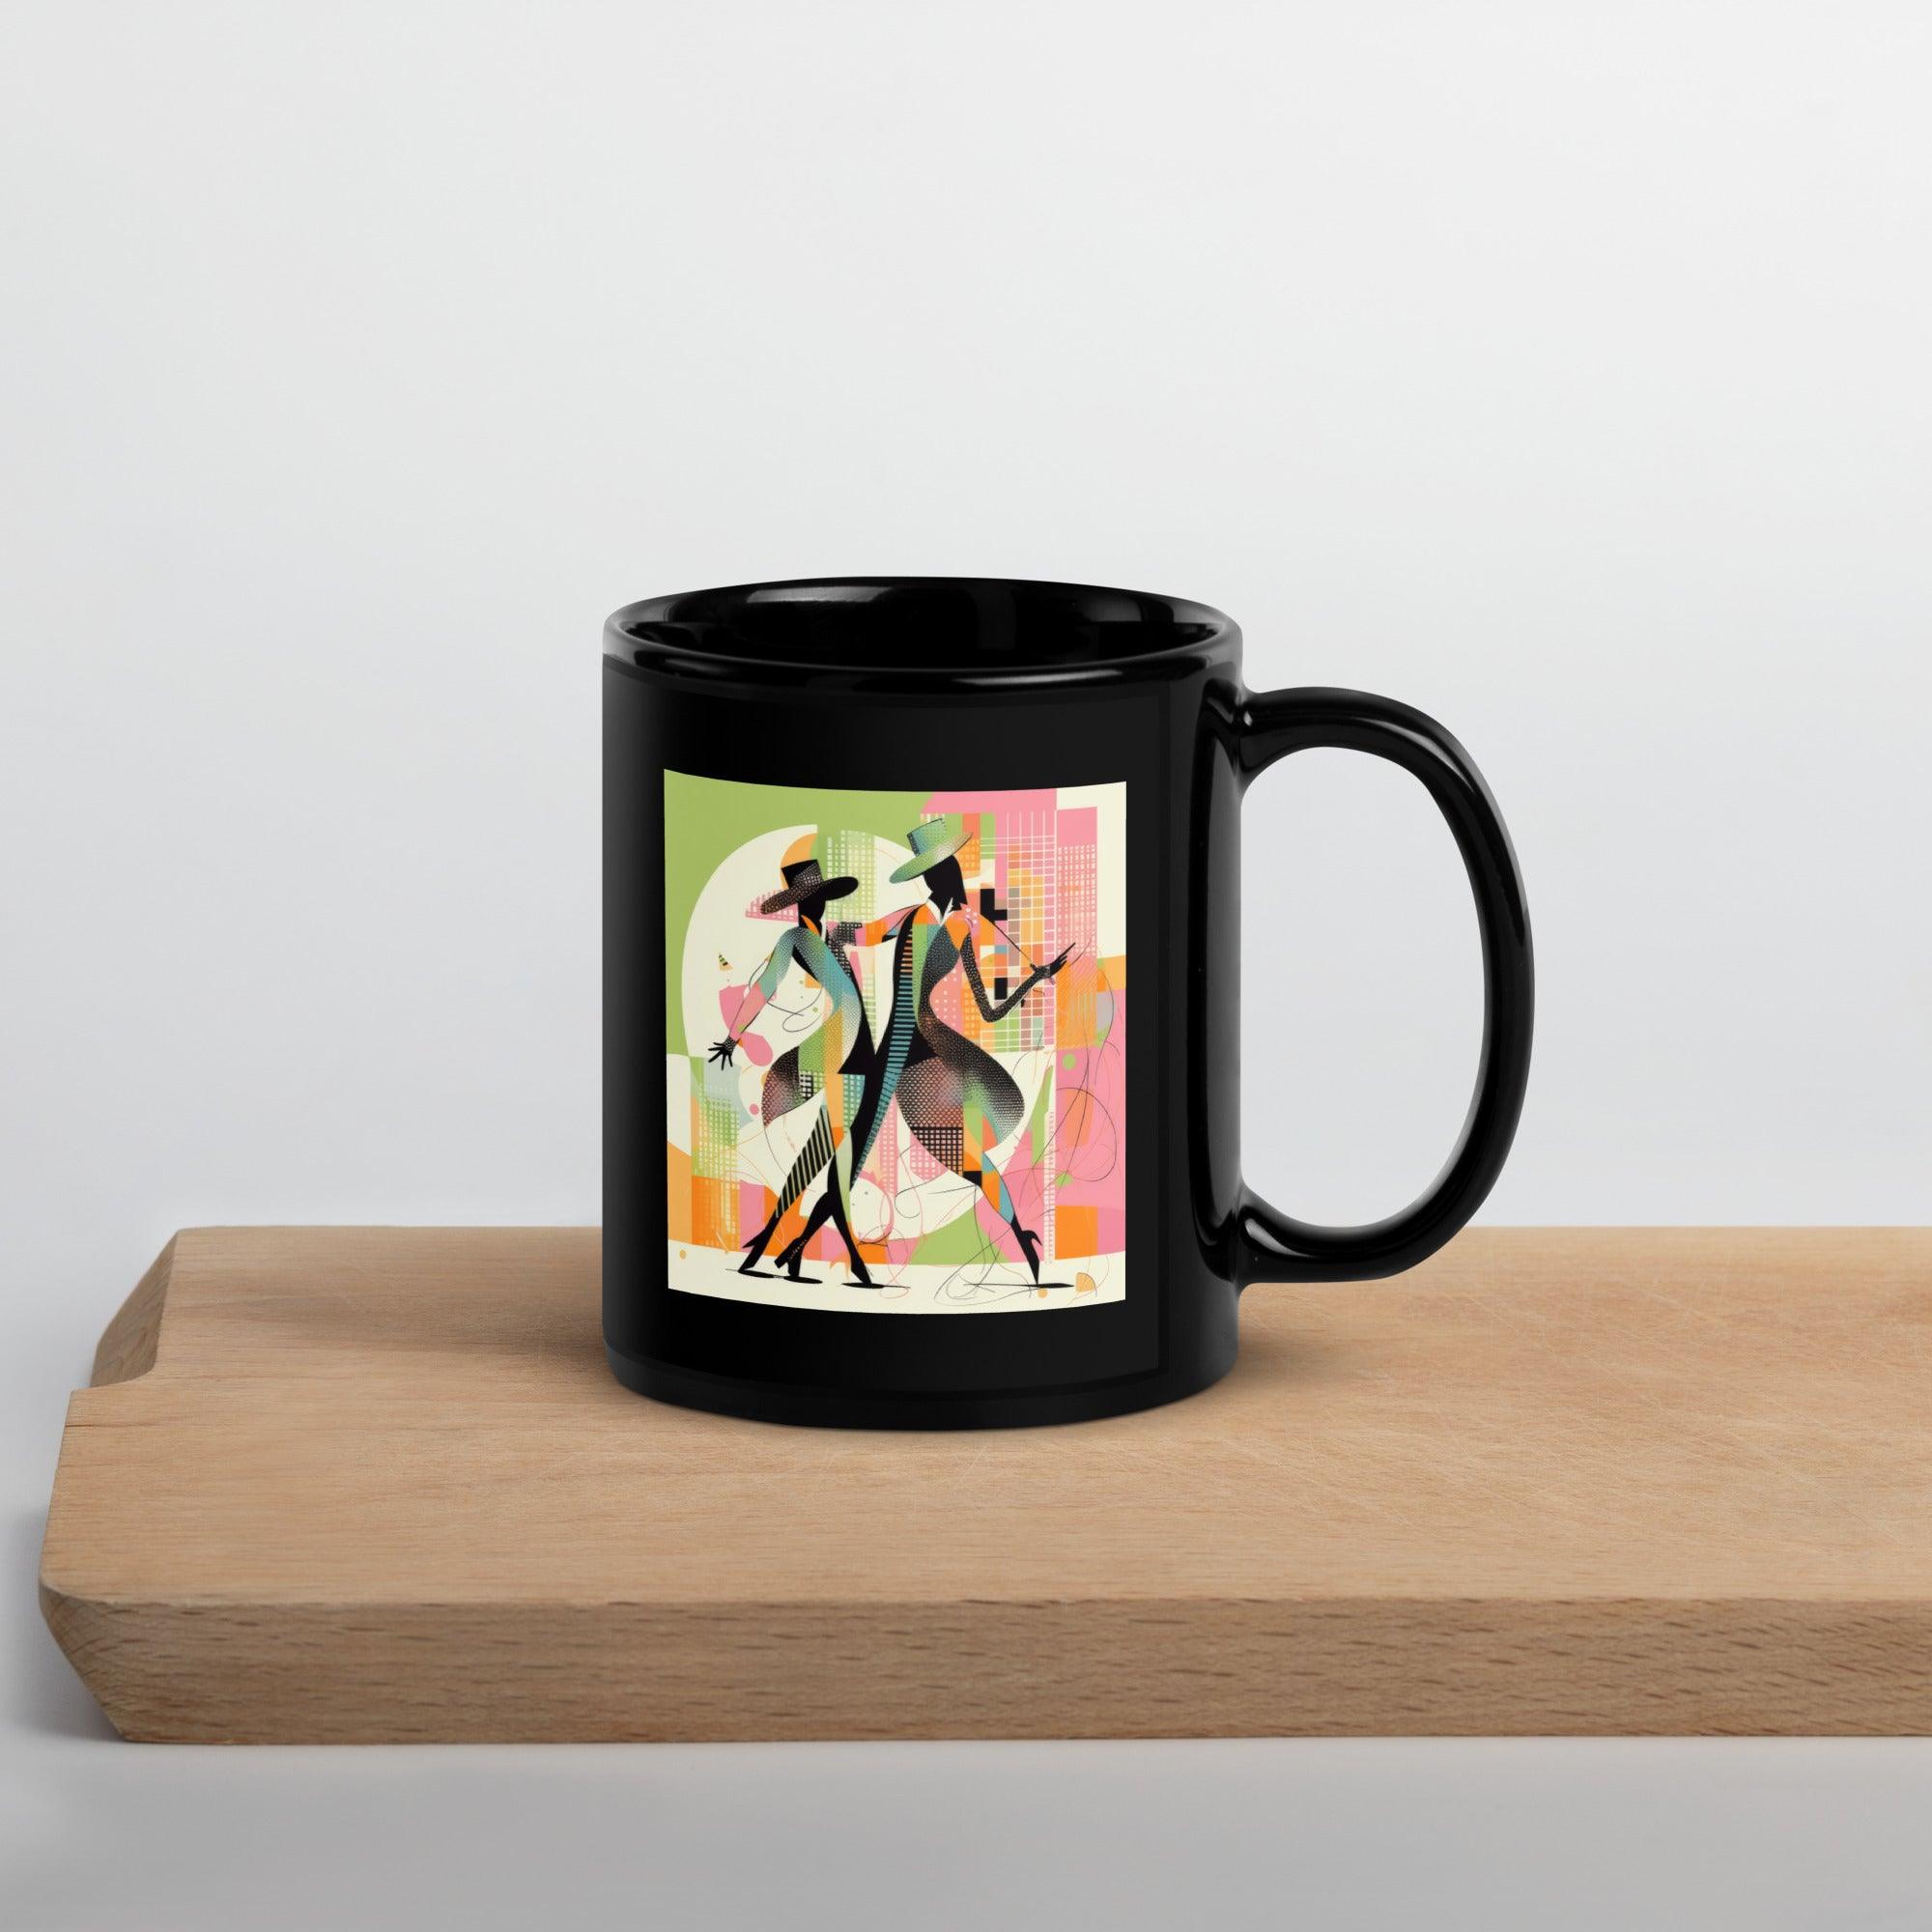 Black glossy mug with women's dance form silhouette.